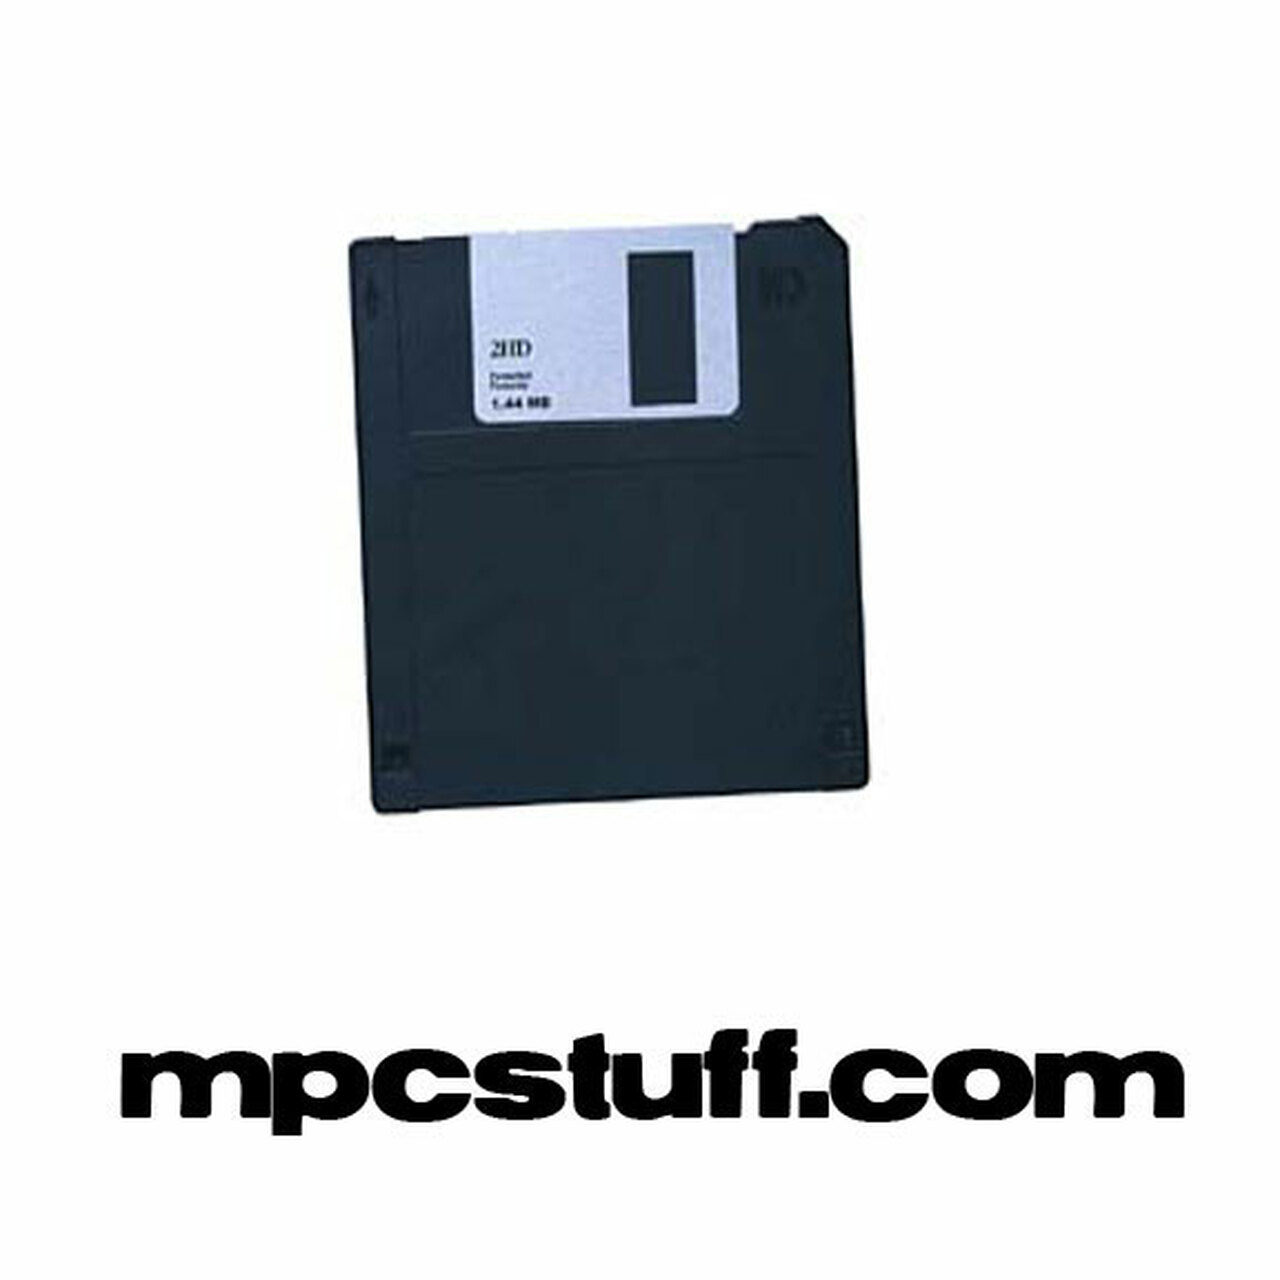 mpc 2000 floppy emulator mac